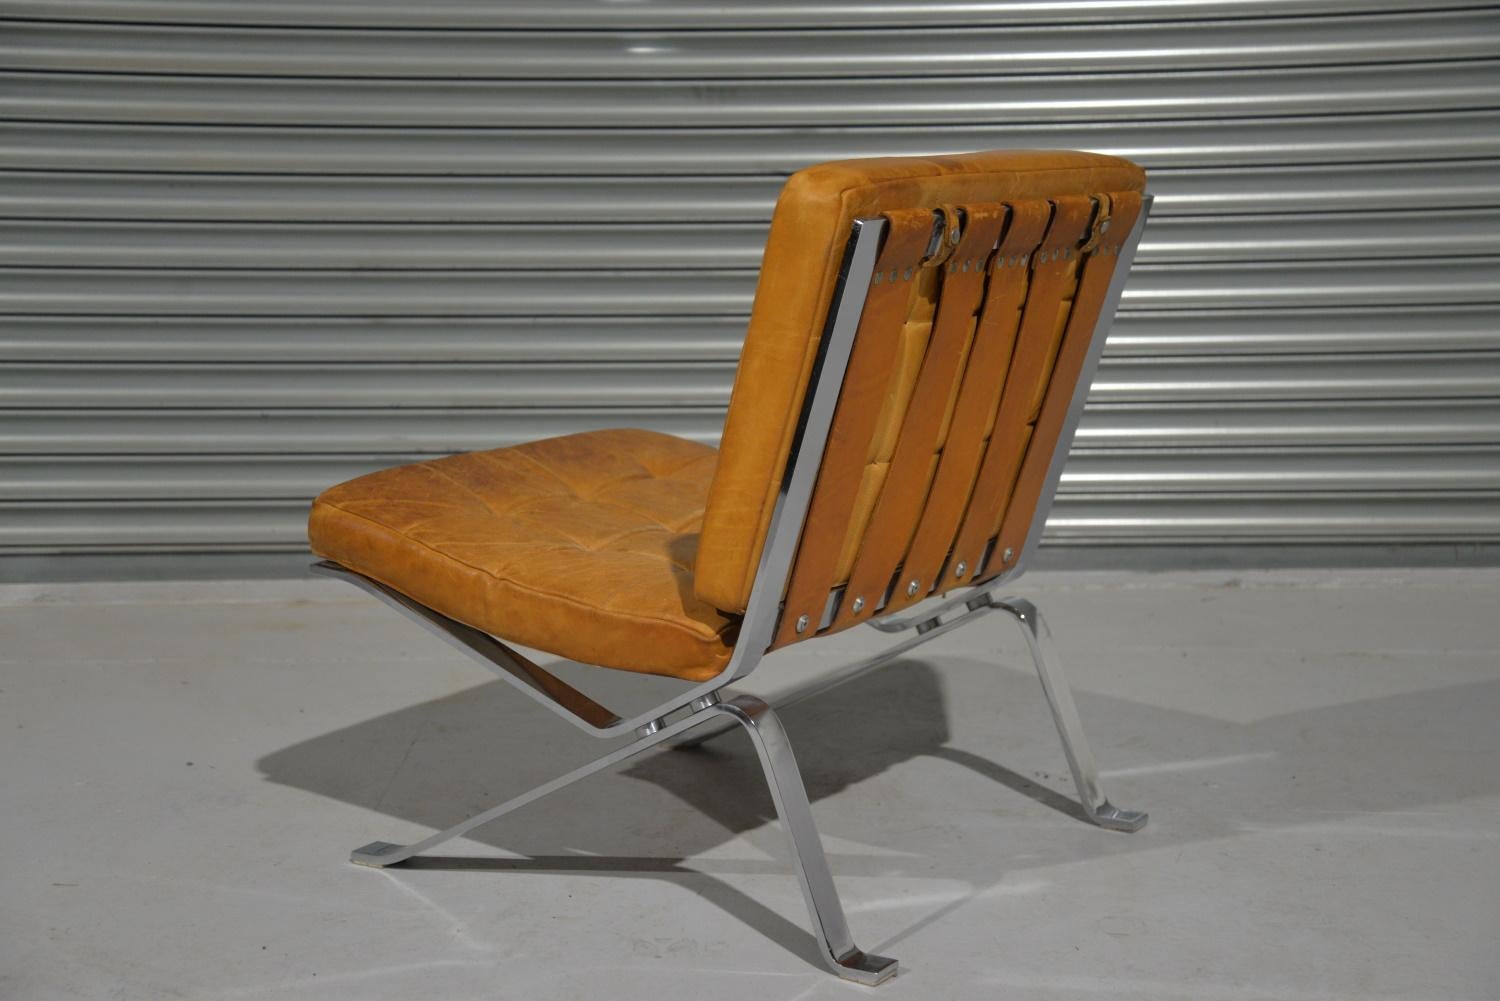 Swiss Vintage Rh-301 Lounge Chair by Robert Haussmann for De Sede, Switzerland, 1954 For Sale